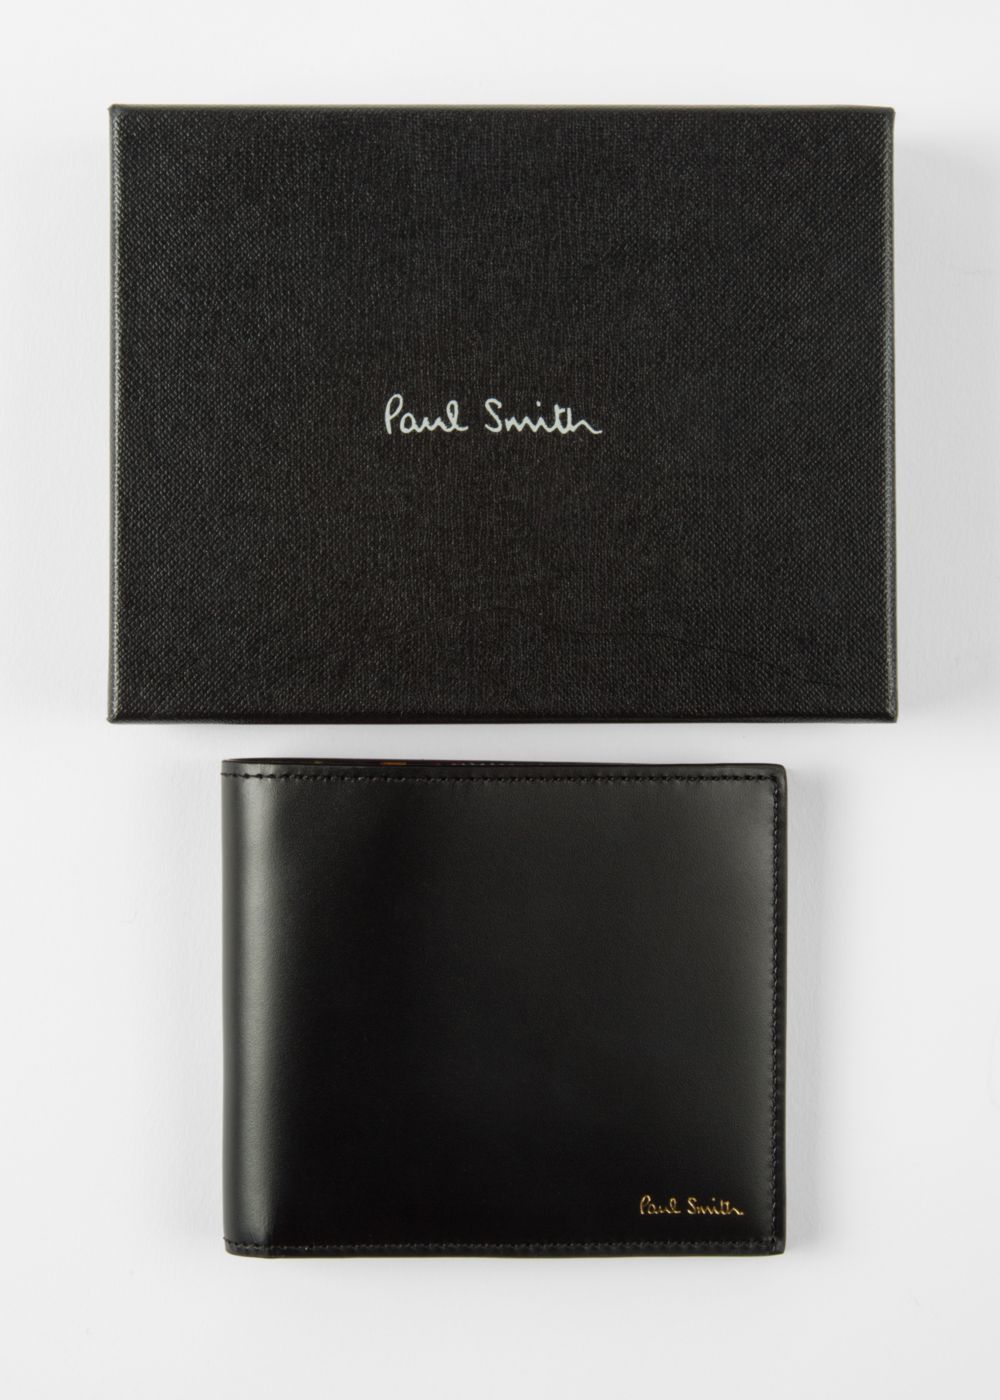 PS Paul Smith ZEBRA Stripe Black & Red trim Leather Billfold Wallet